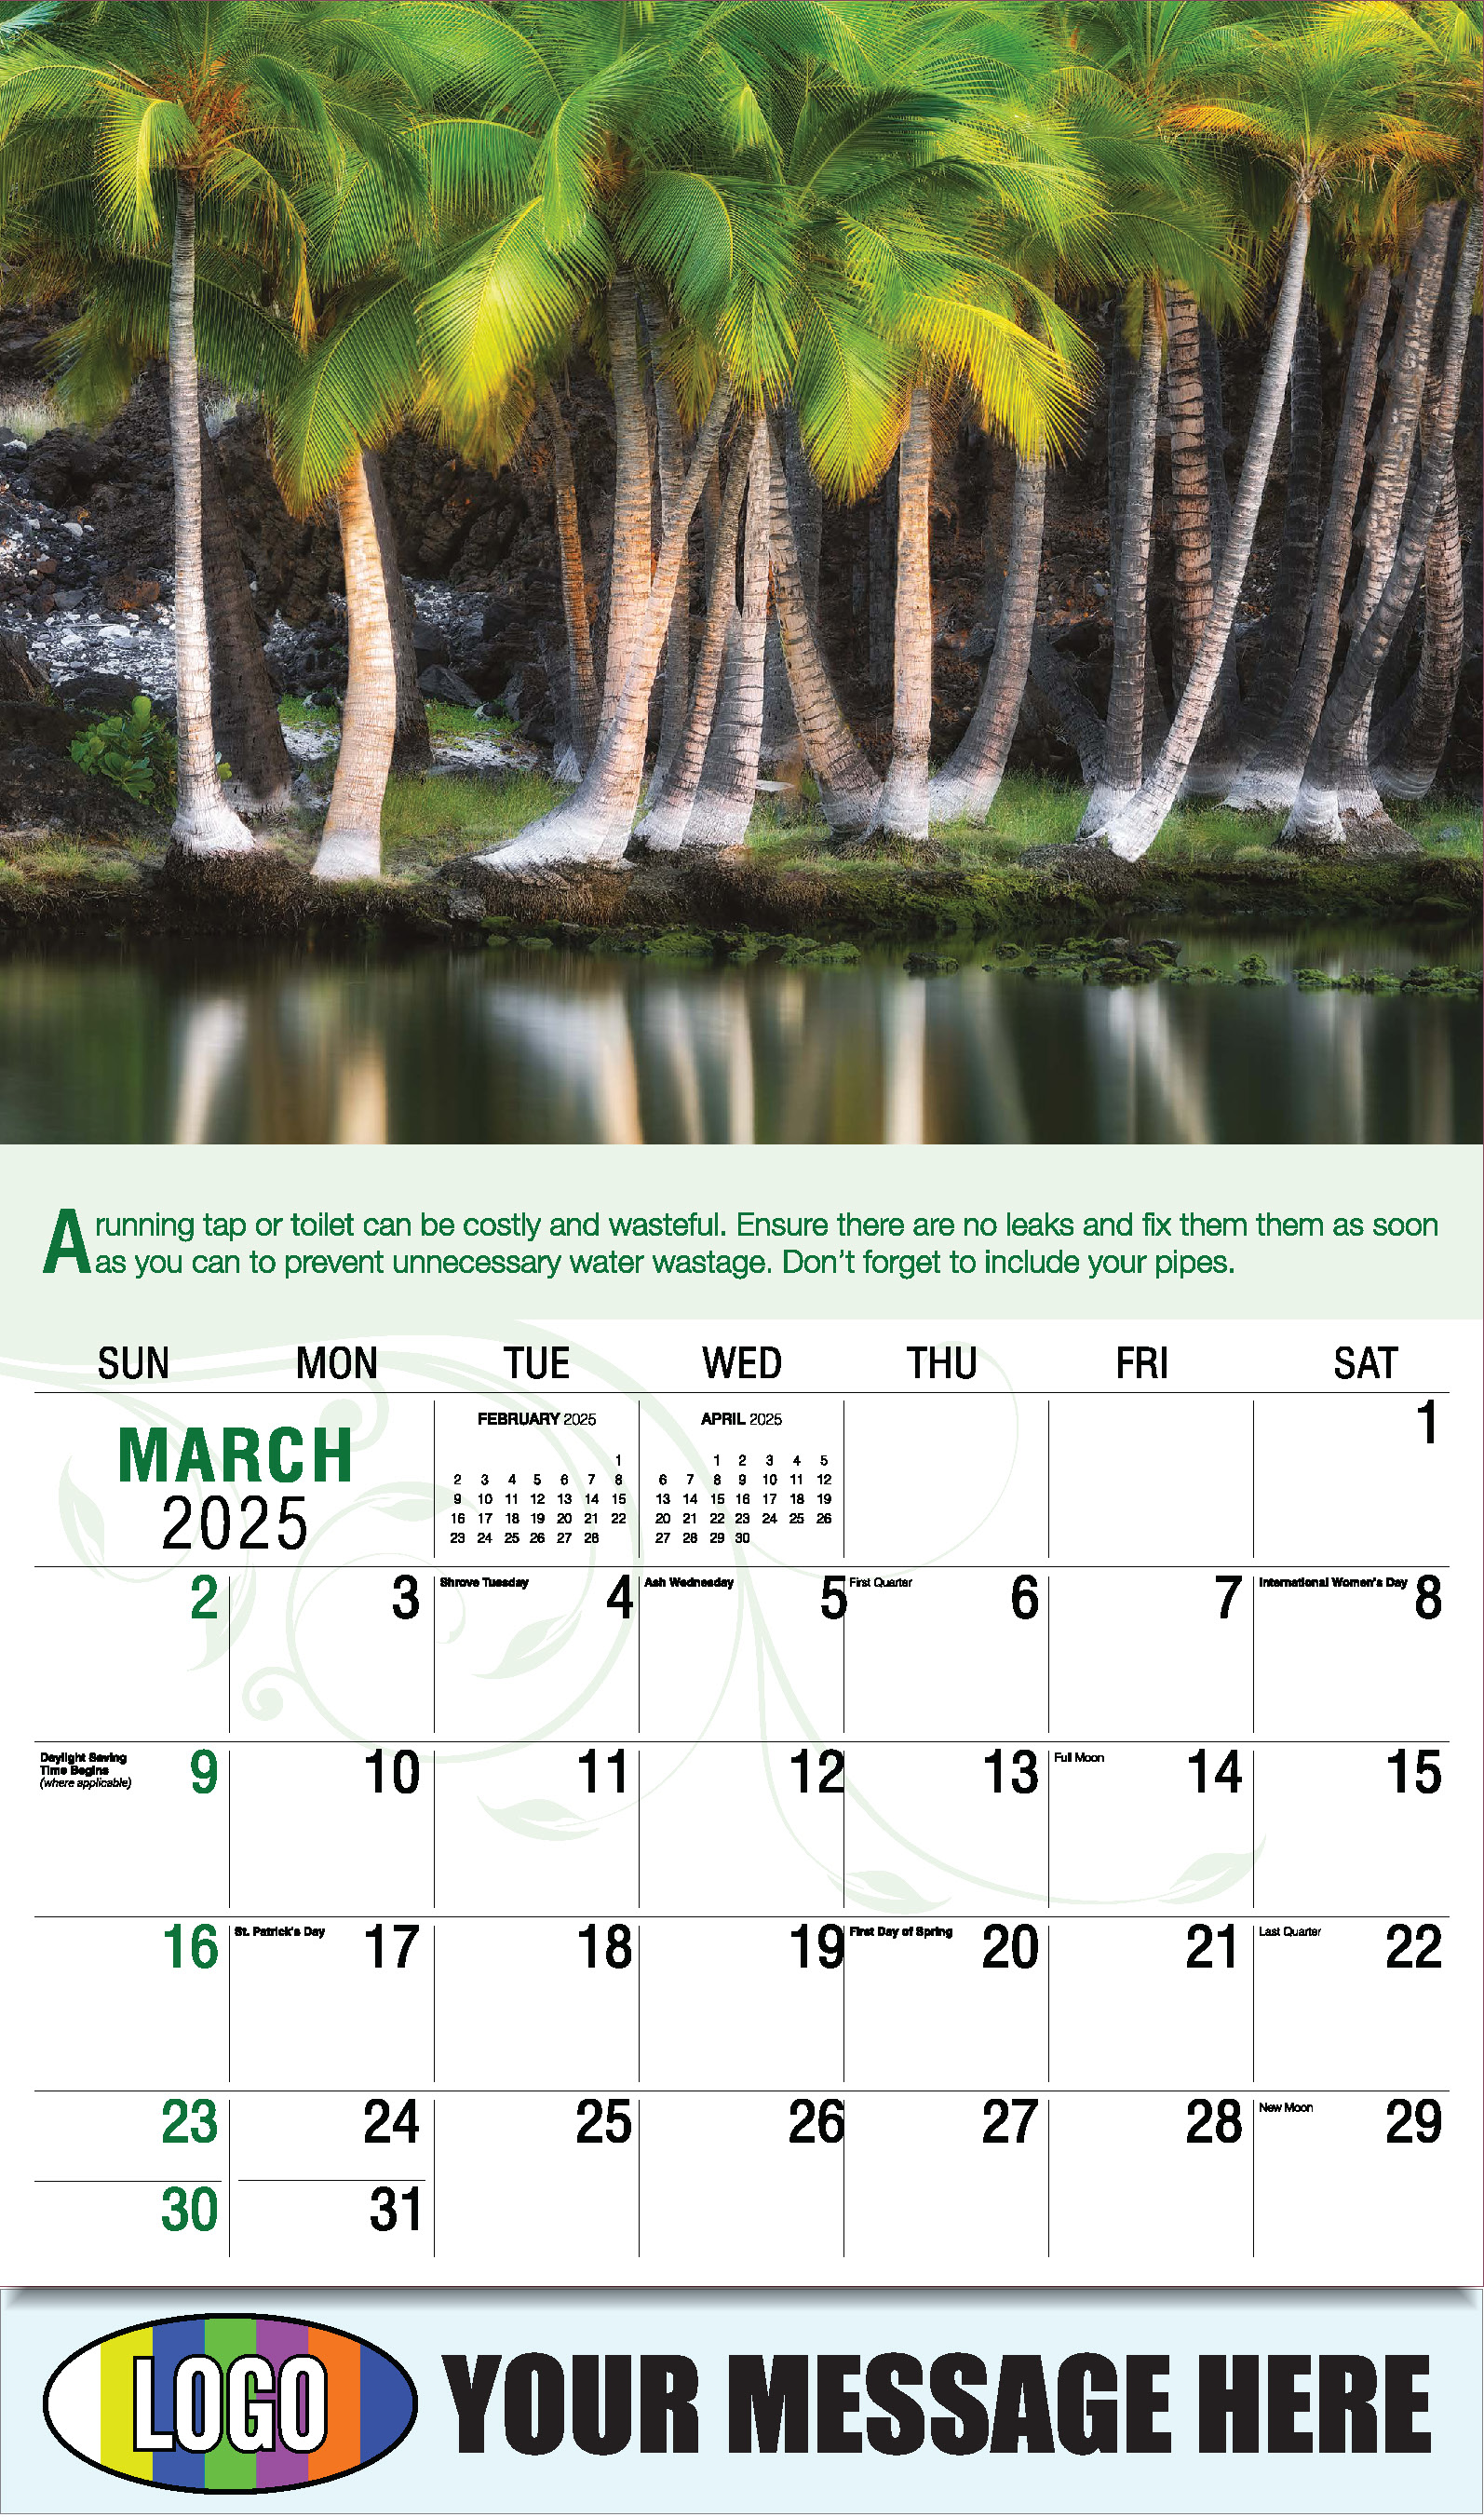 Go Green 2025 Business Promotion Calendar - March